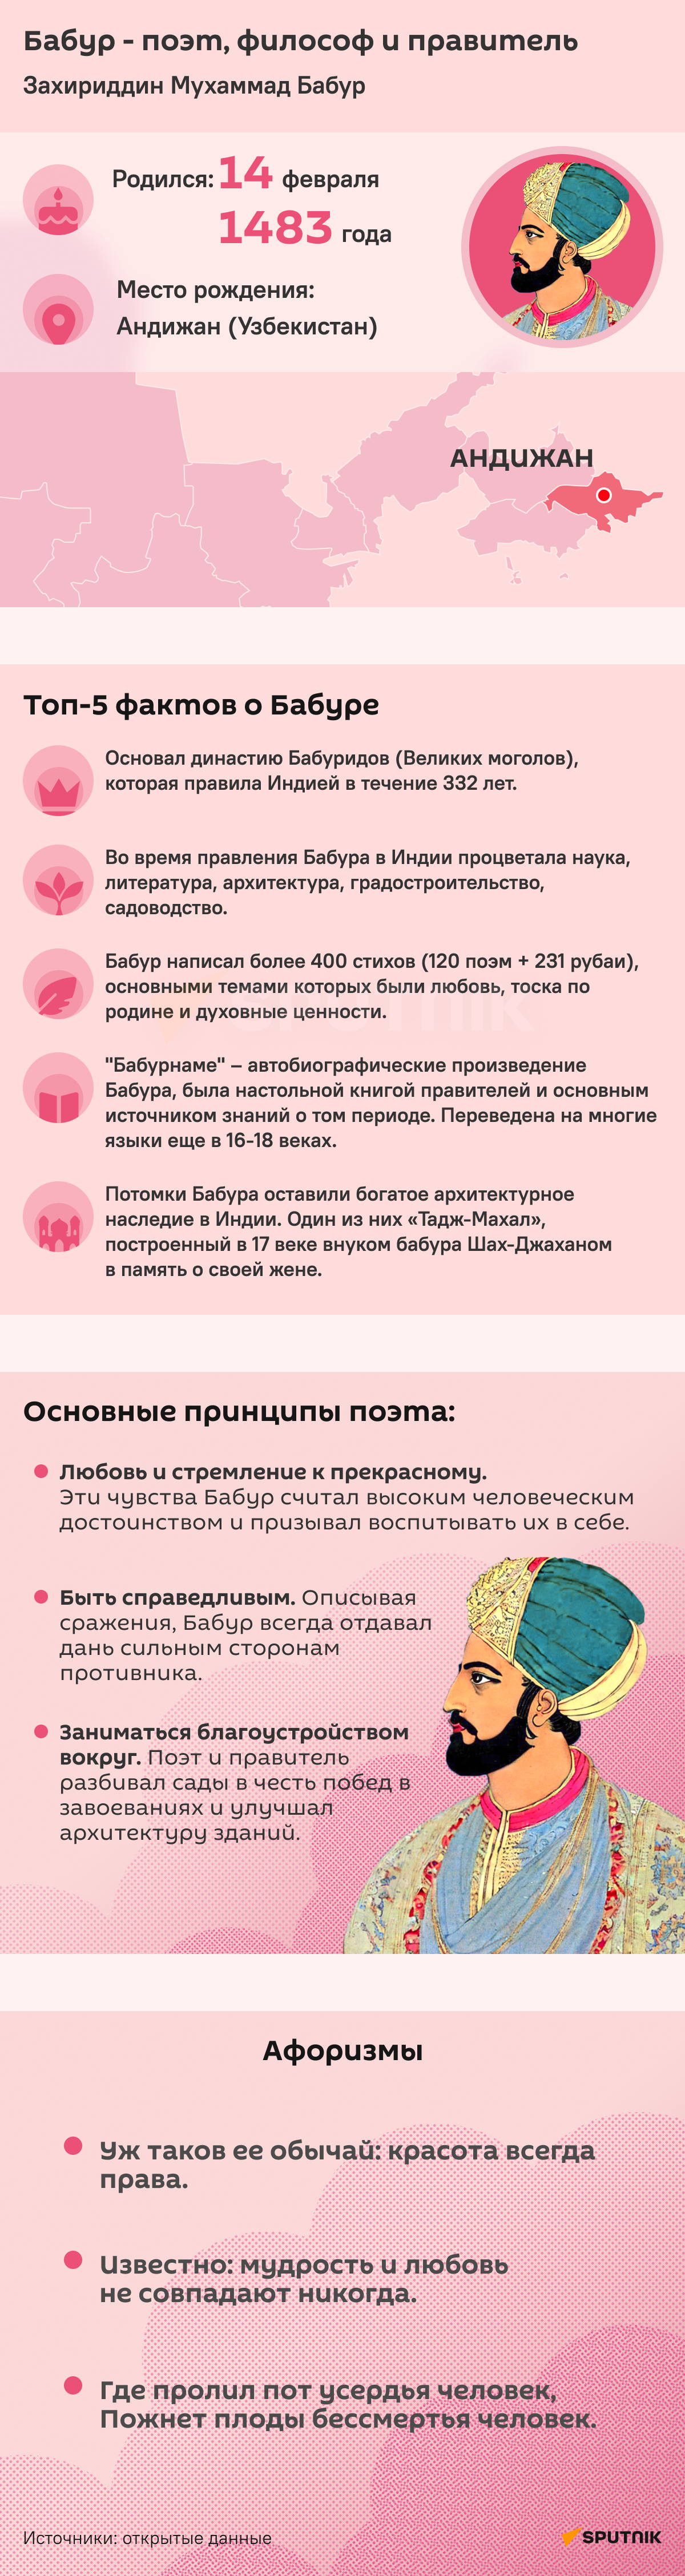 Бабур инфографика - Sputnik Узбекистан